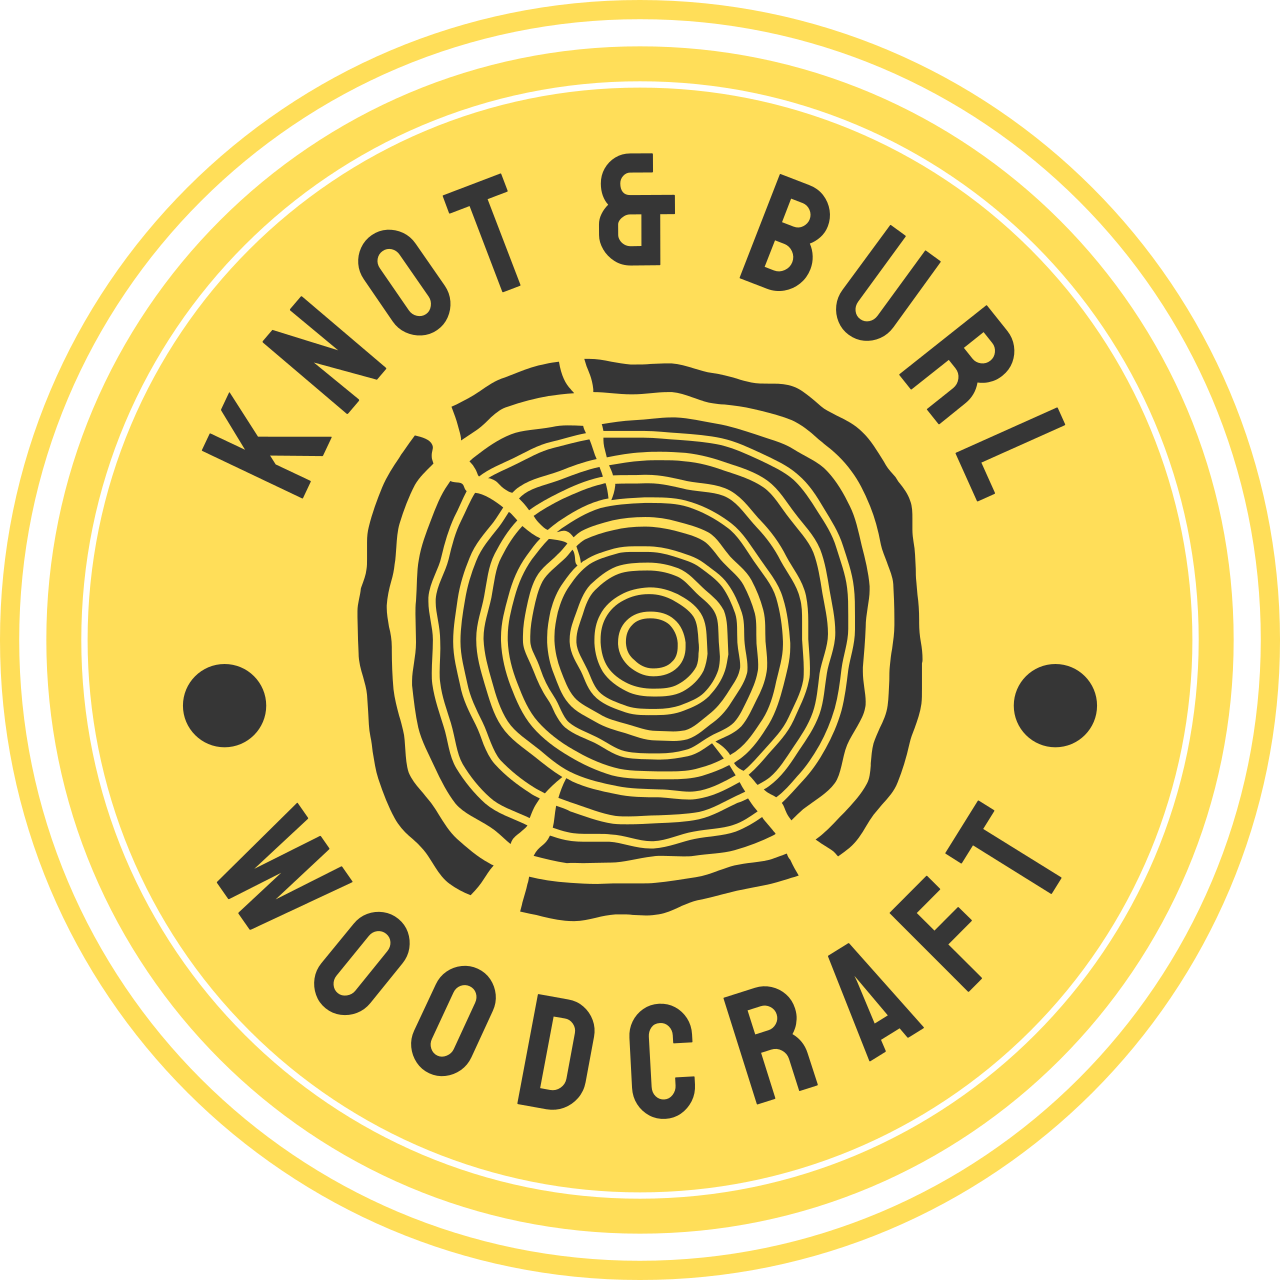 KNOT & BURL's logo